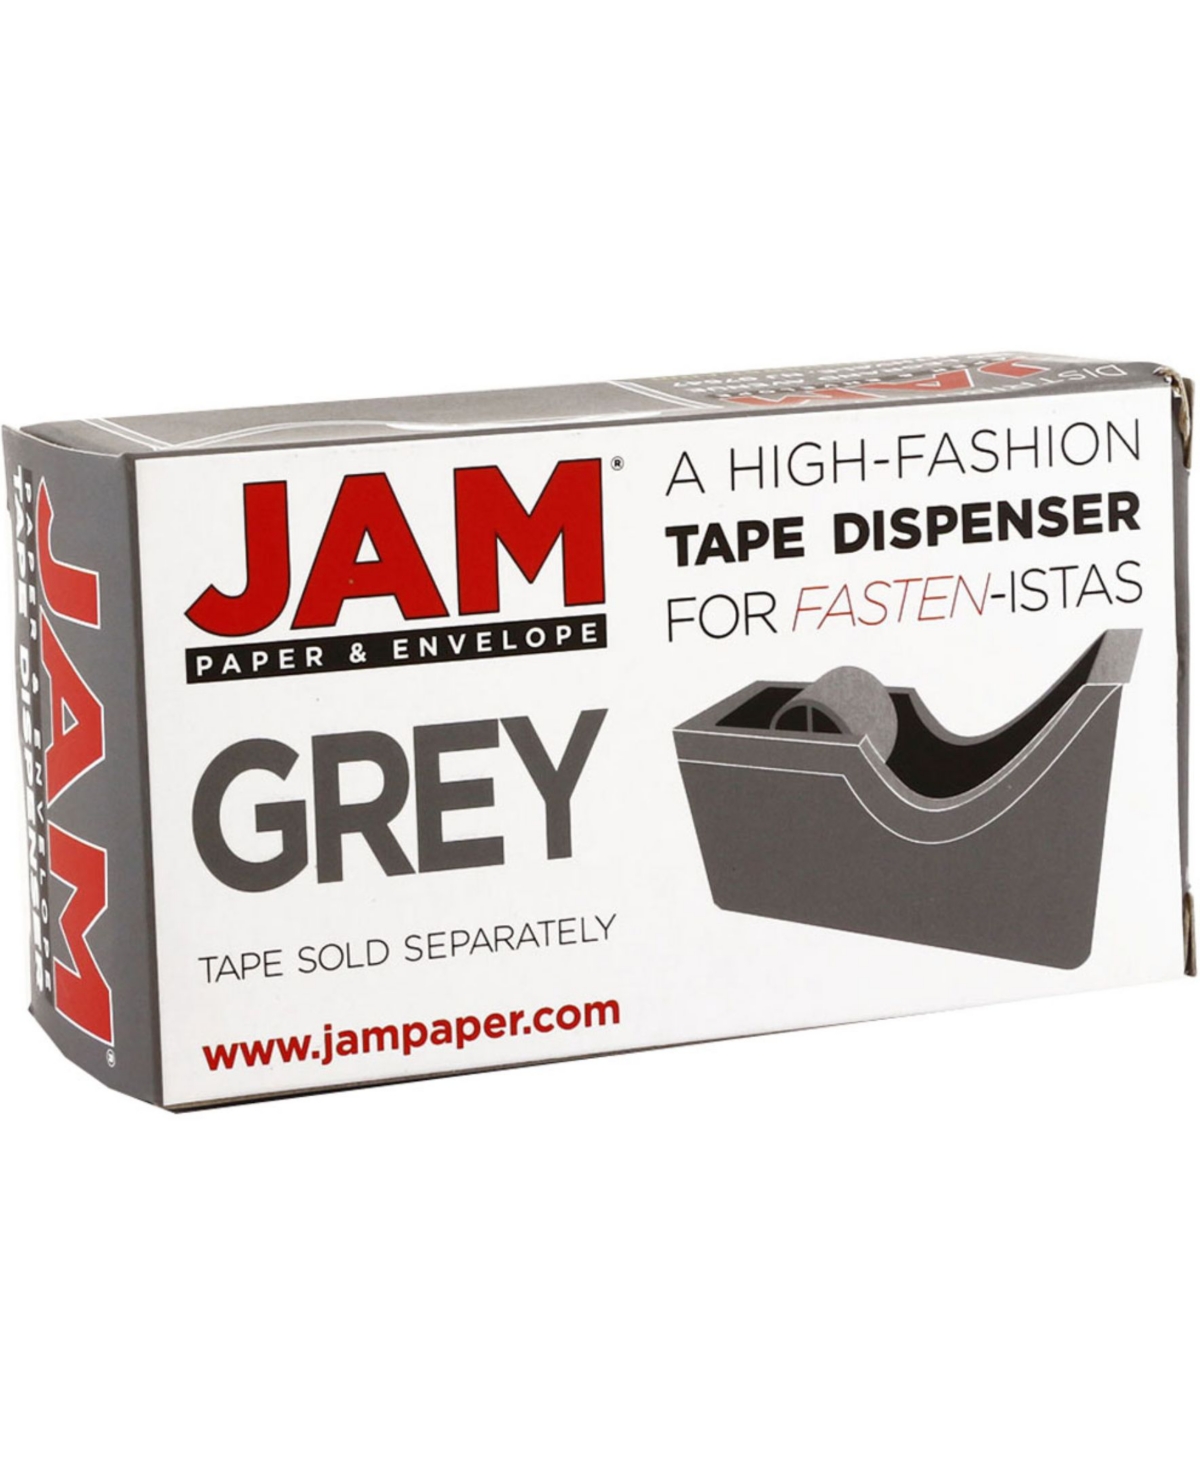 Jam Paper Colorful Desk Tape Dispensers - Gray